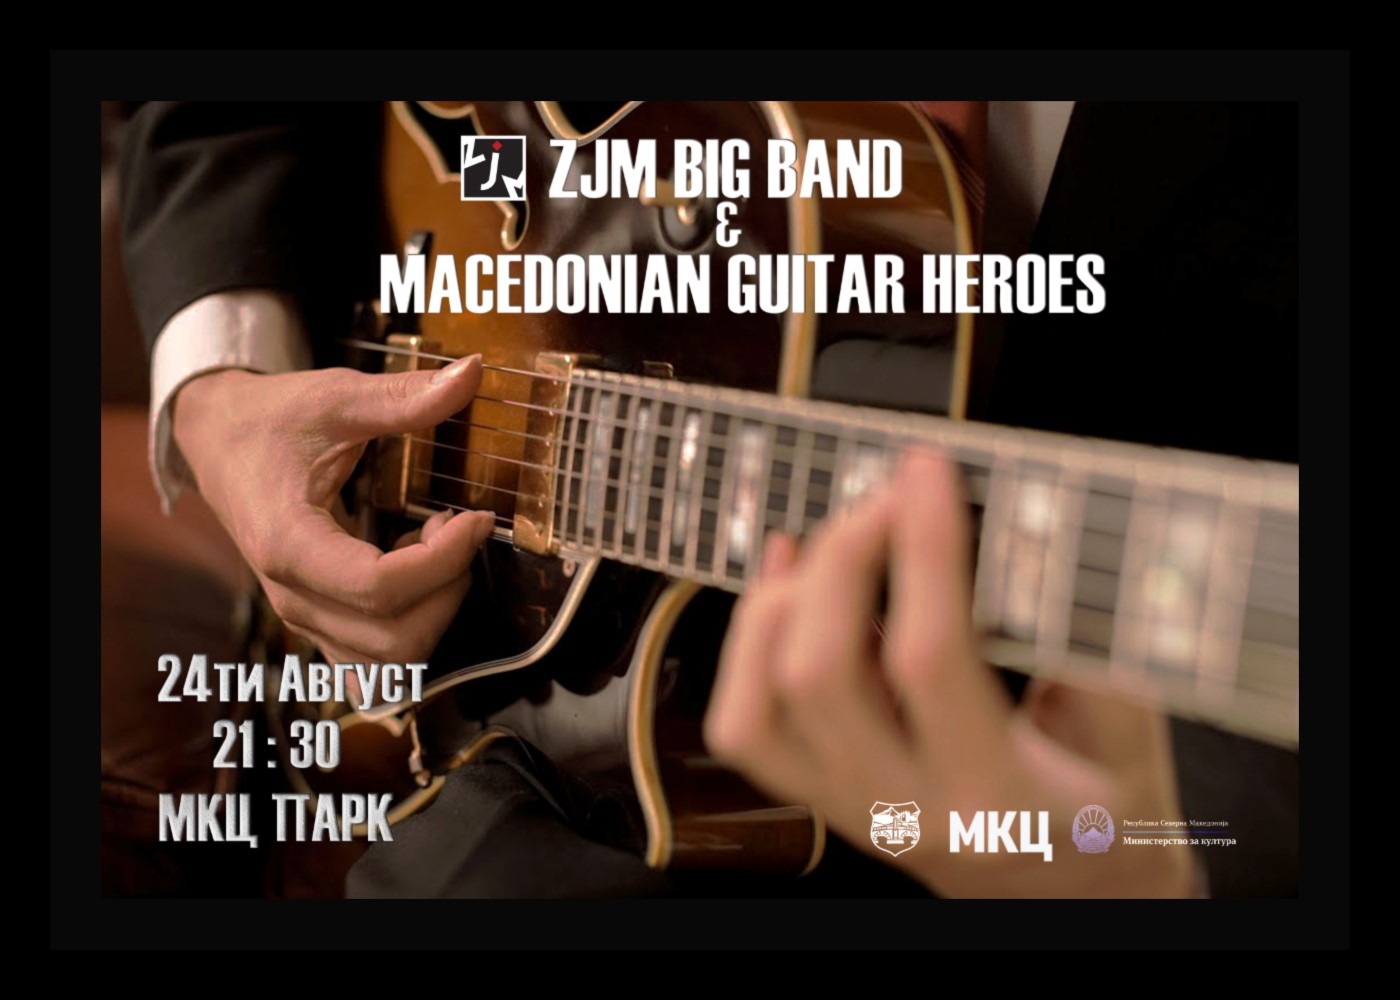 МКЦ: ZJM Big Band Orchestra & Macedonian Guitar Heroes